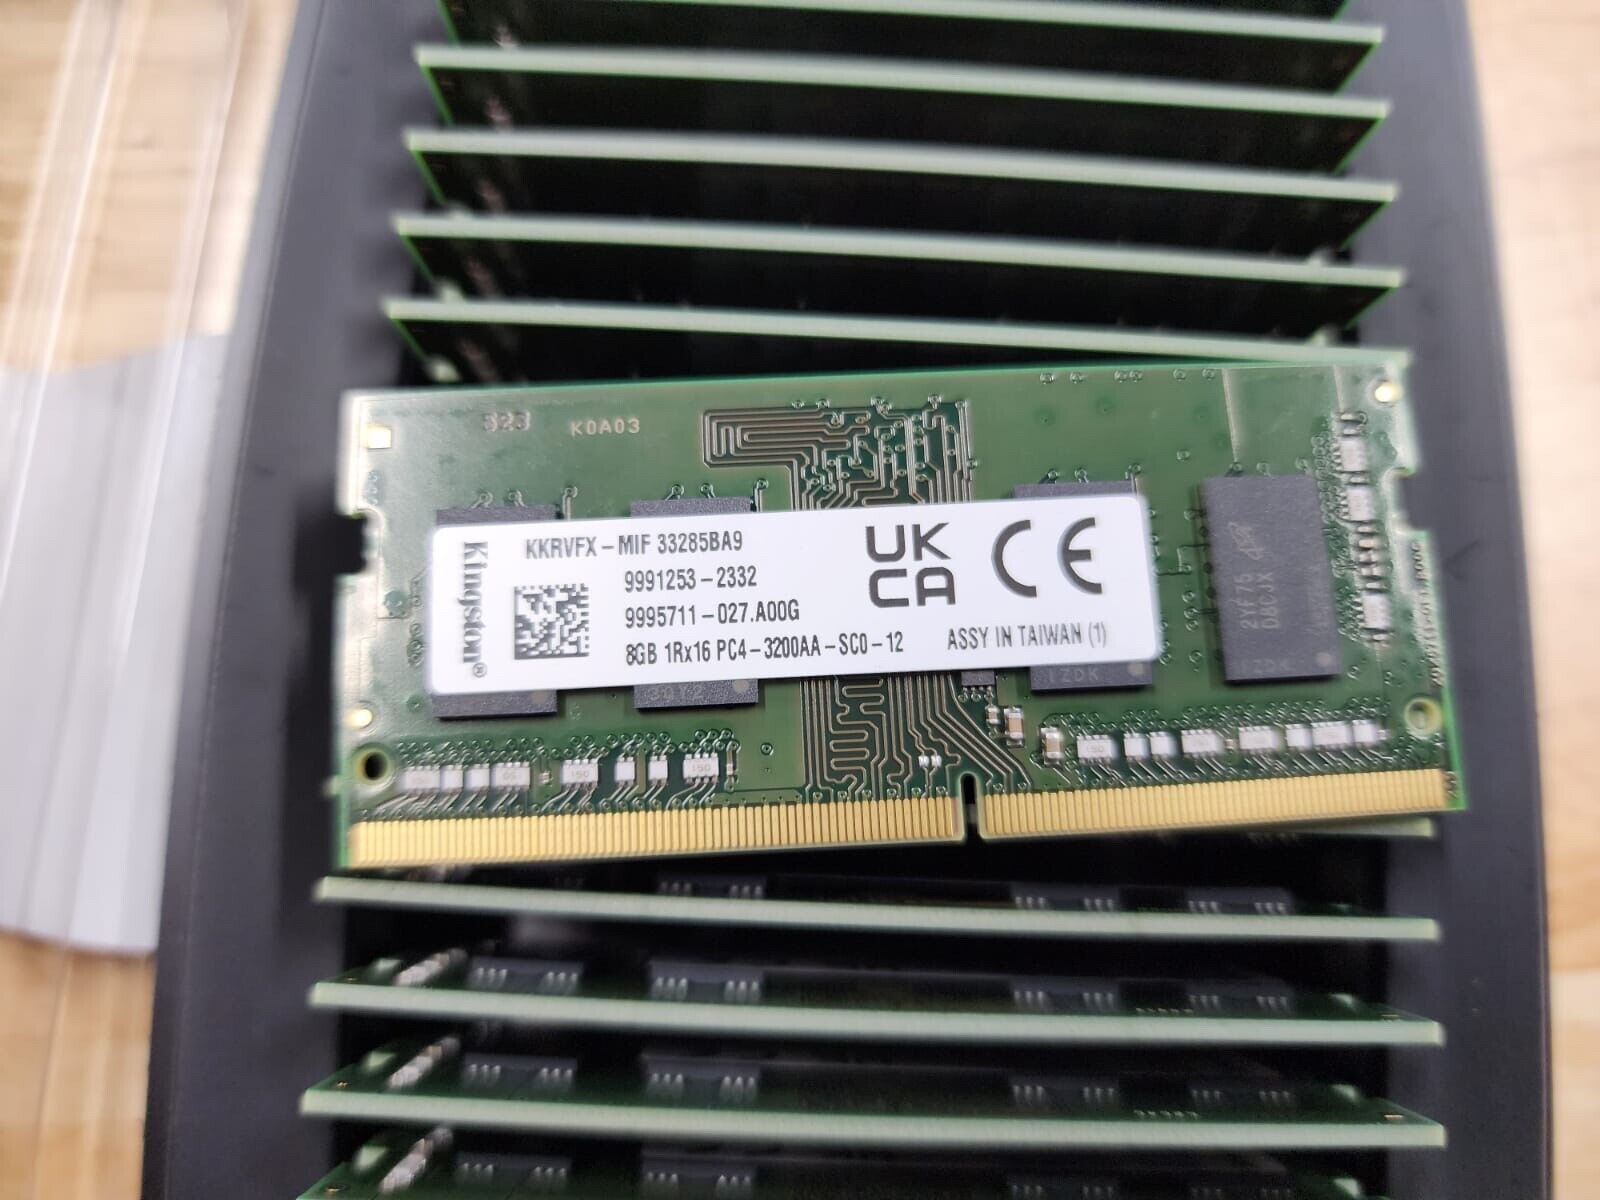 Kingston (8GB) DDR4 1Rx16 (PC4-3200AA) Laptop RAM Memory (KKRVFX-MIF)